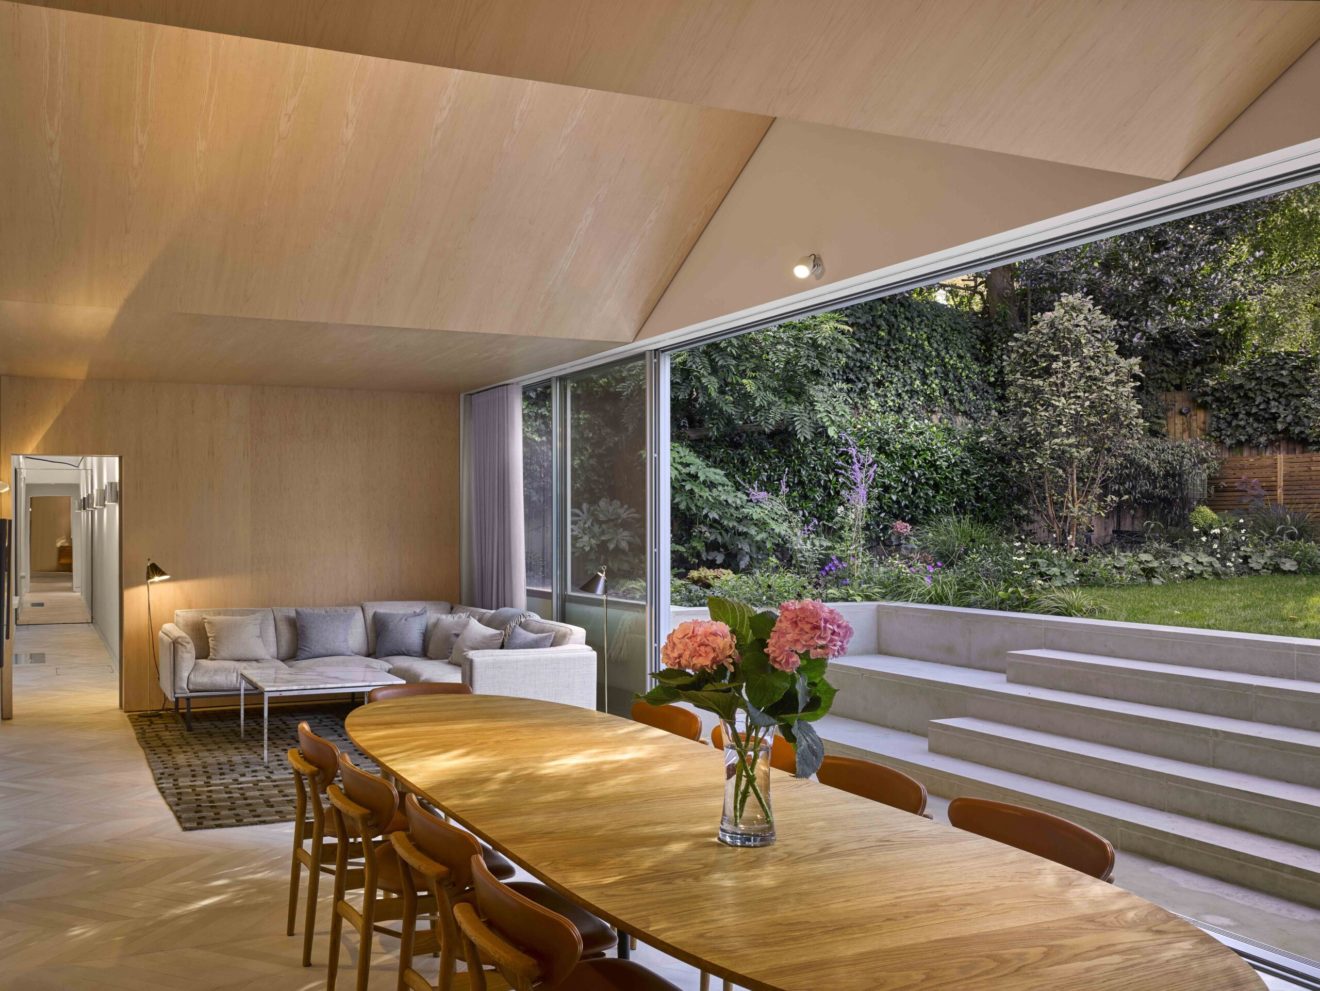 A modernist home - Will Pryce - Suzy Hoodless - Interior designer - Aucoot Estate Agents